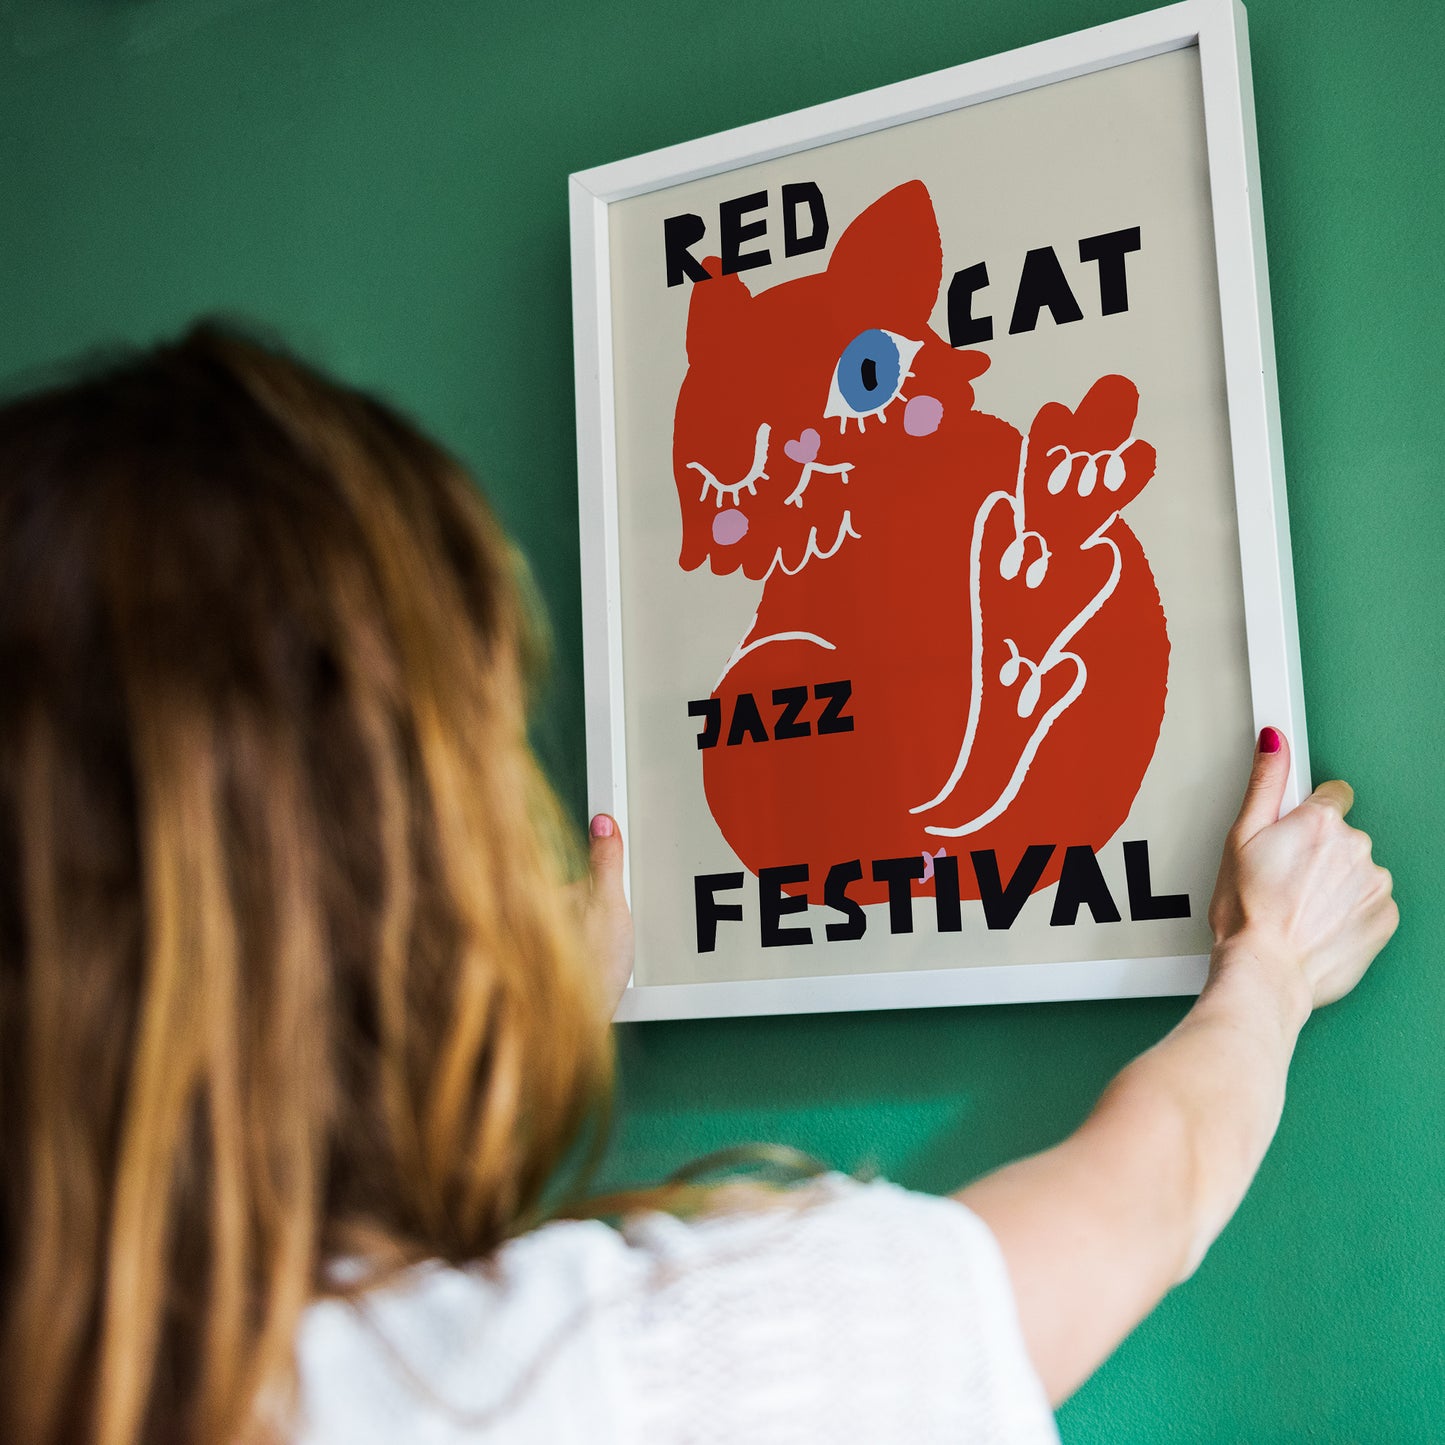 Red Cat Jazz Festival